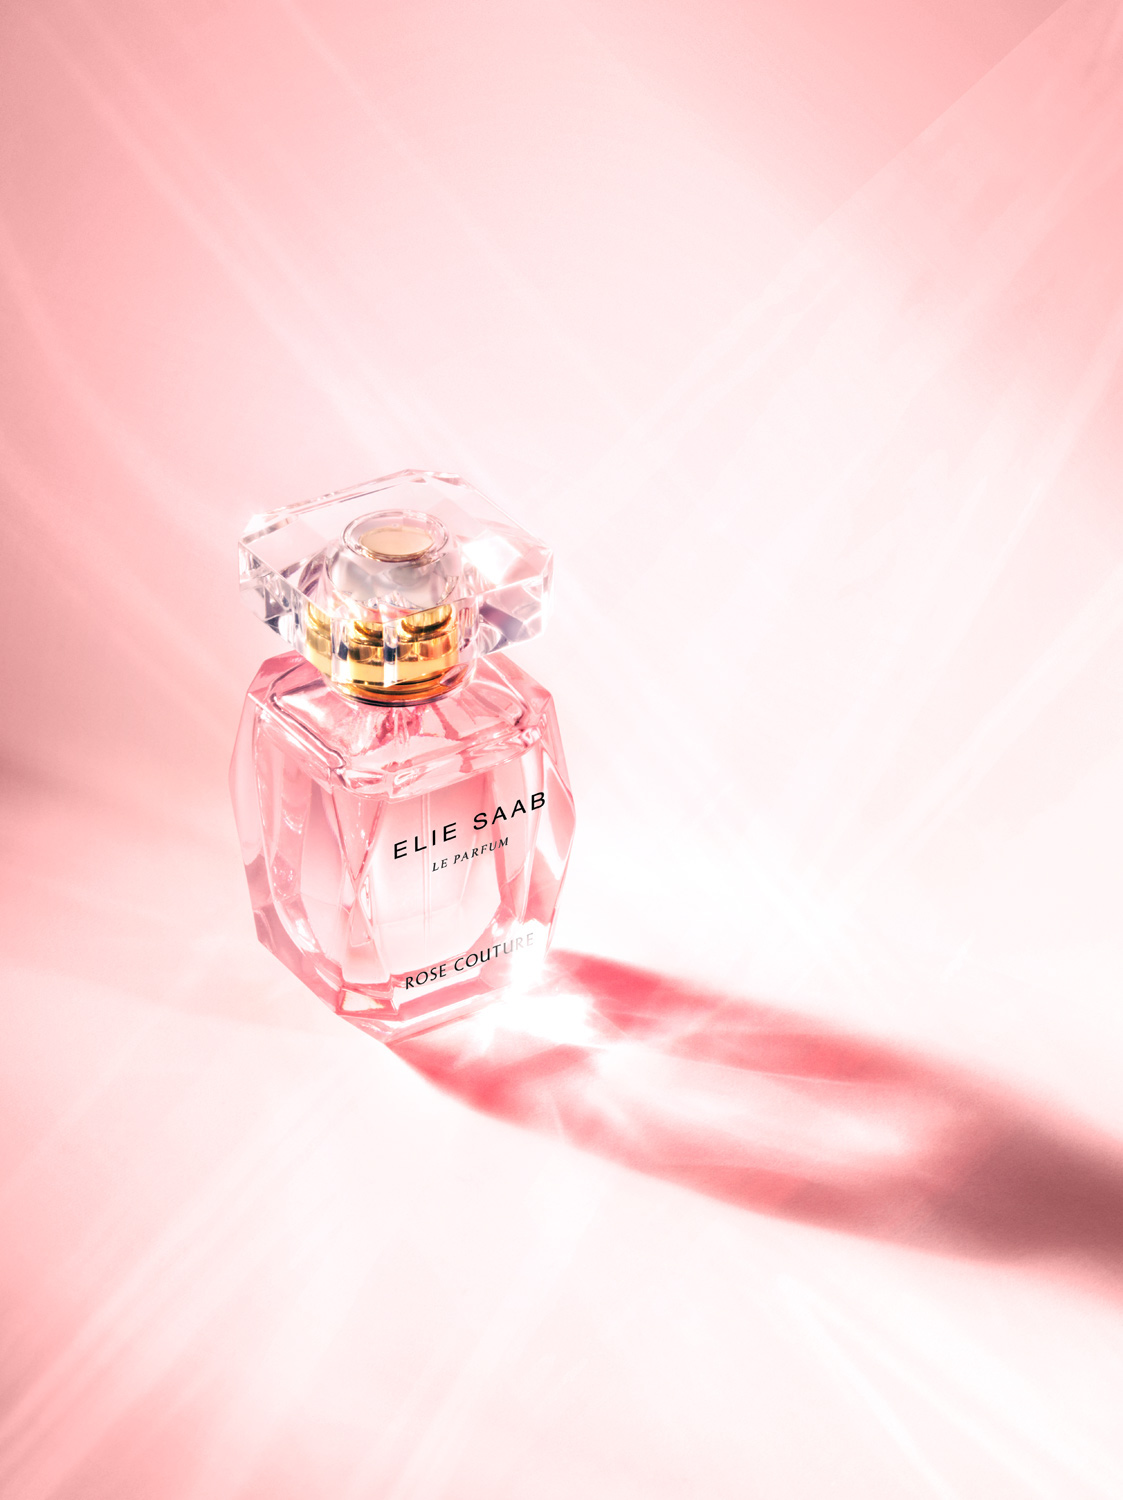 cosmetics perfume still life bottle glass creative product product